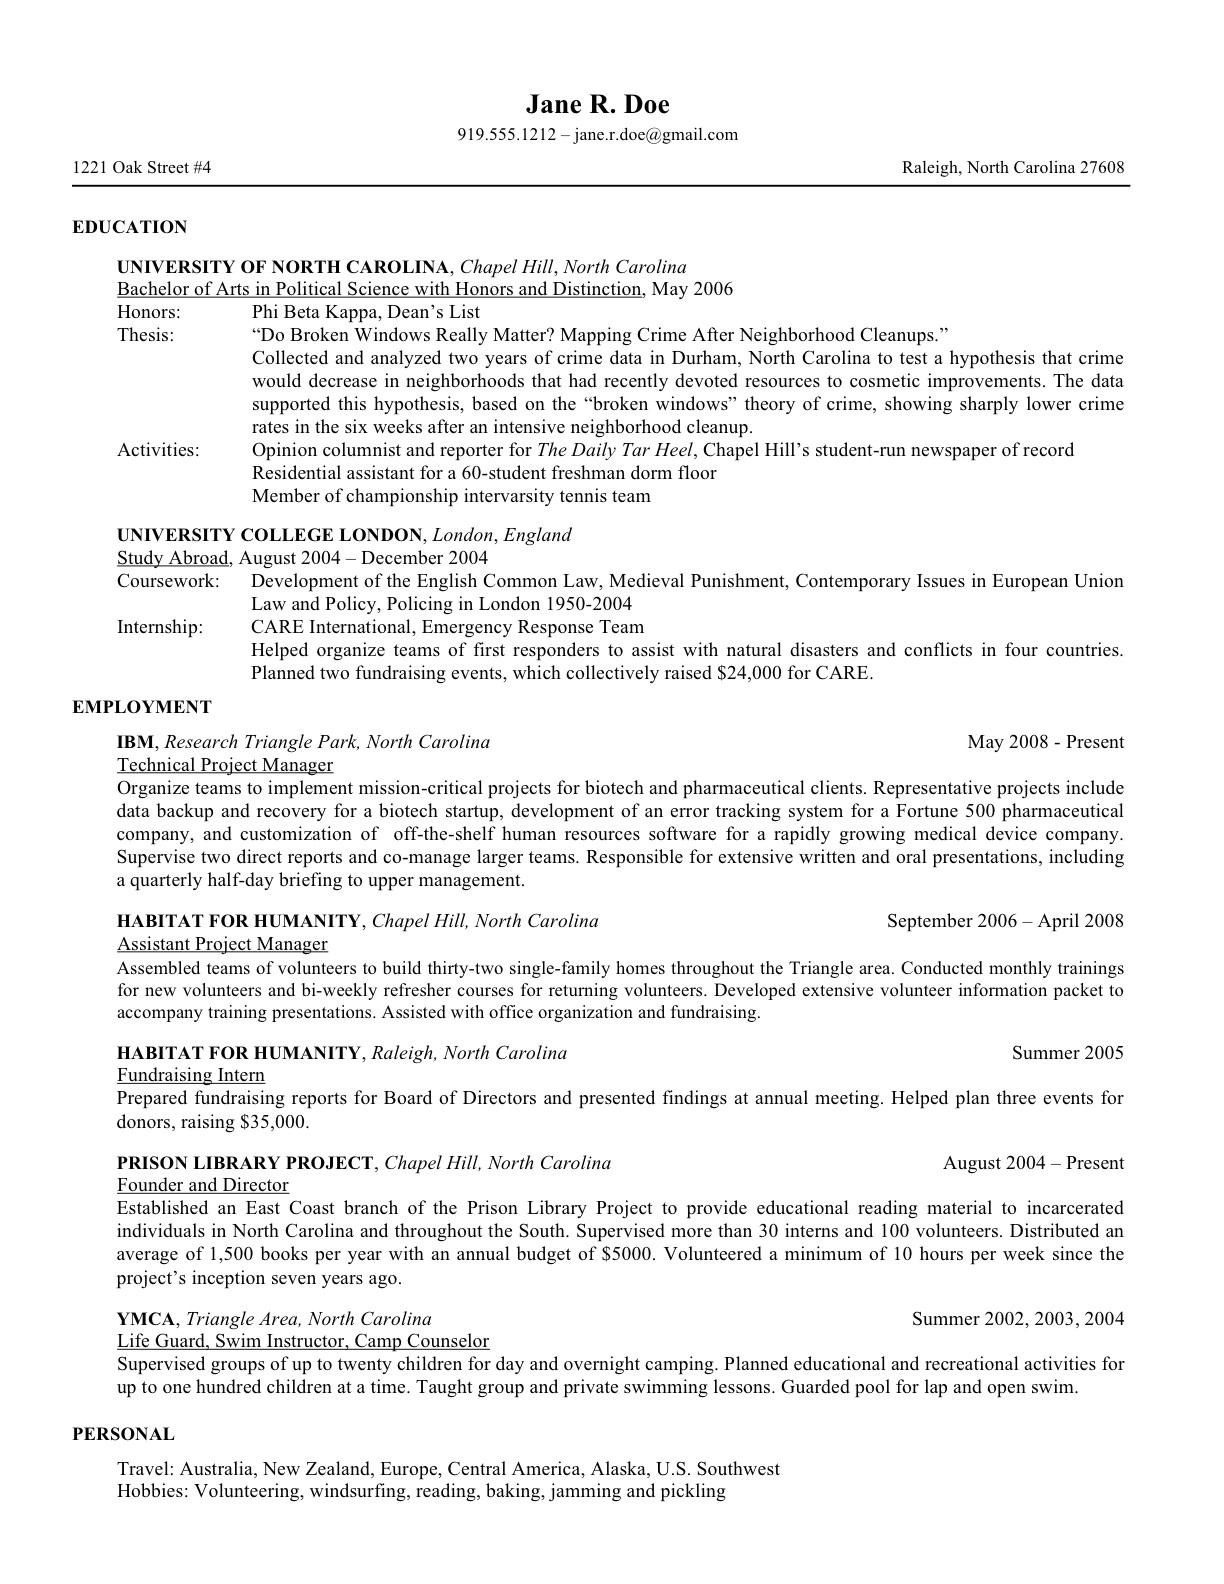 7 law school resume templates